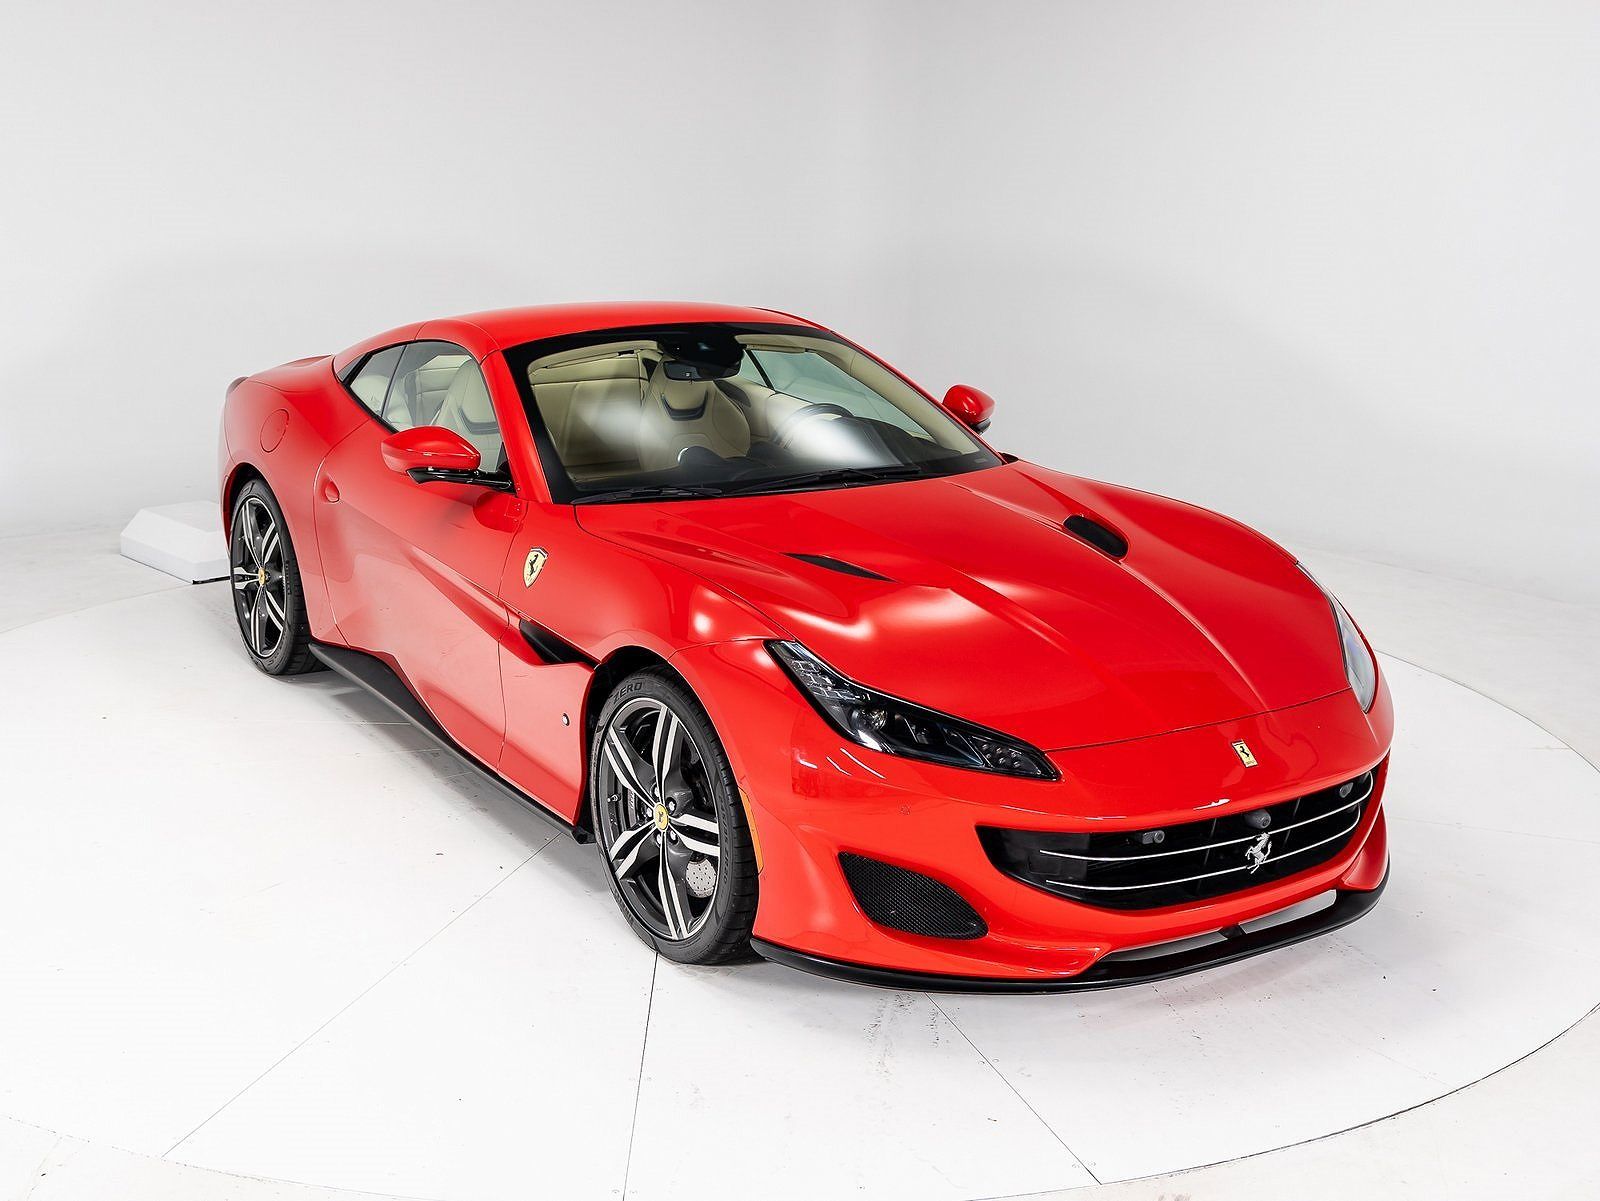 2020 Ferrari Portofino null image 15